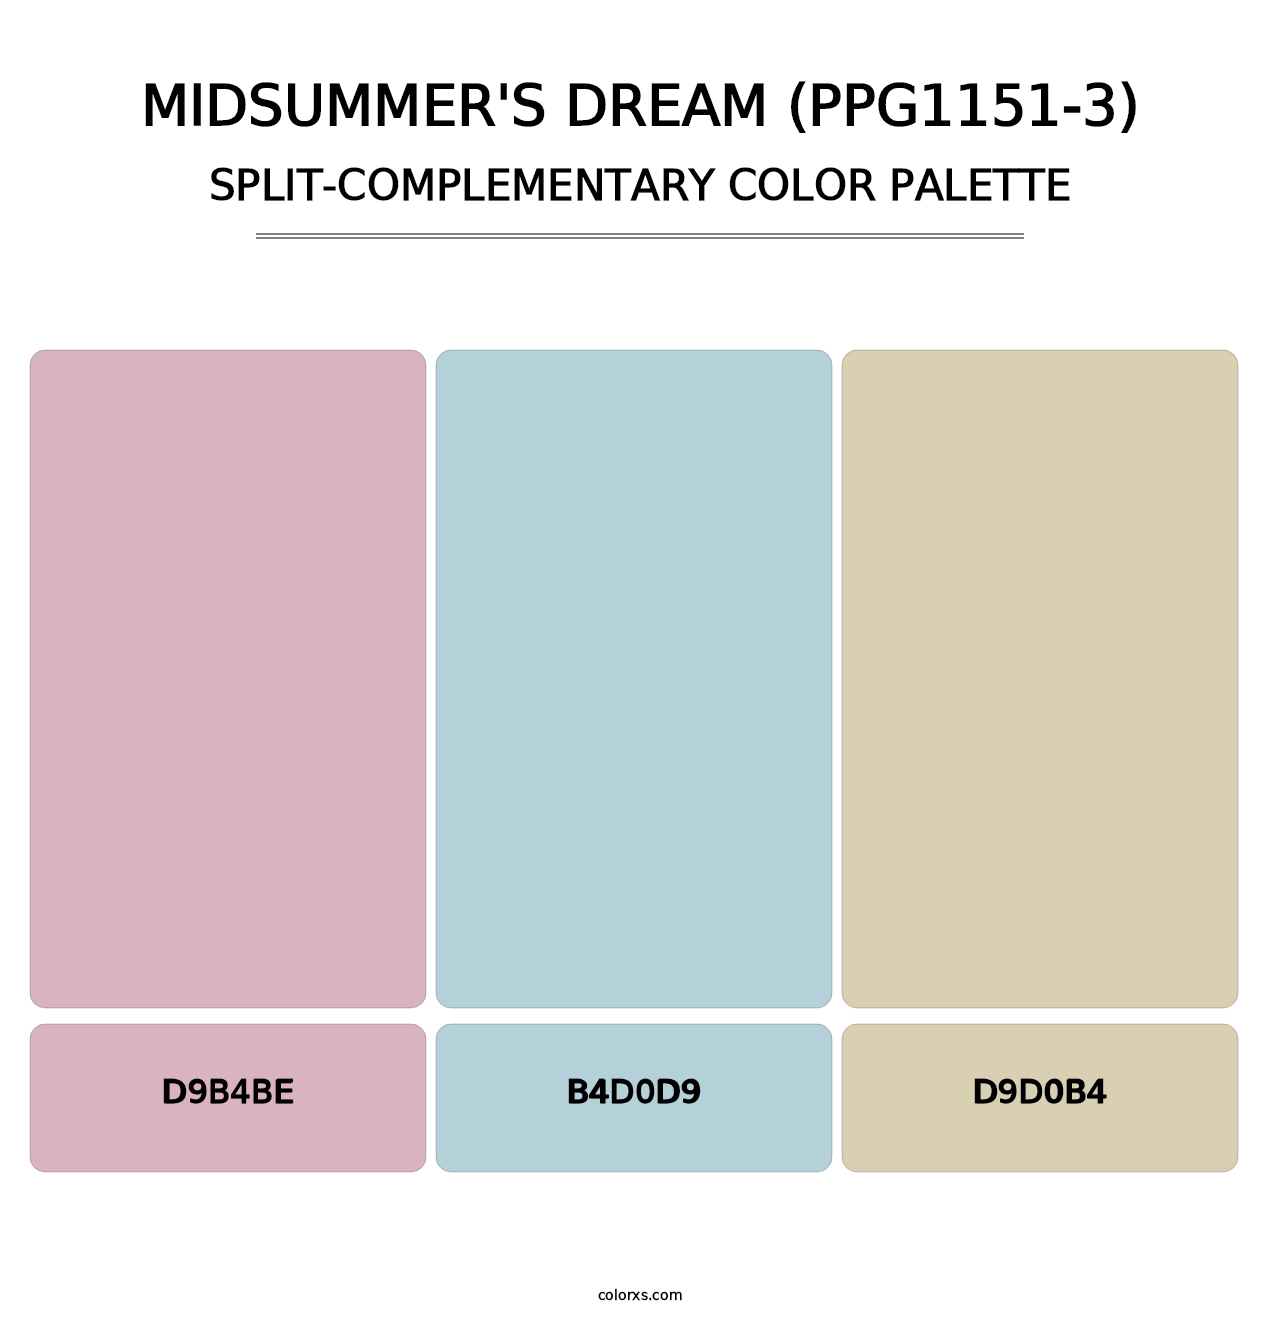 Midsummer's Dream (PPG1151-3) - Split-Complementary Color Palette